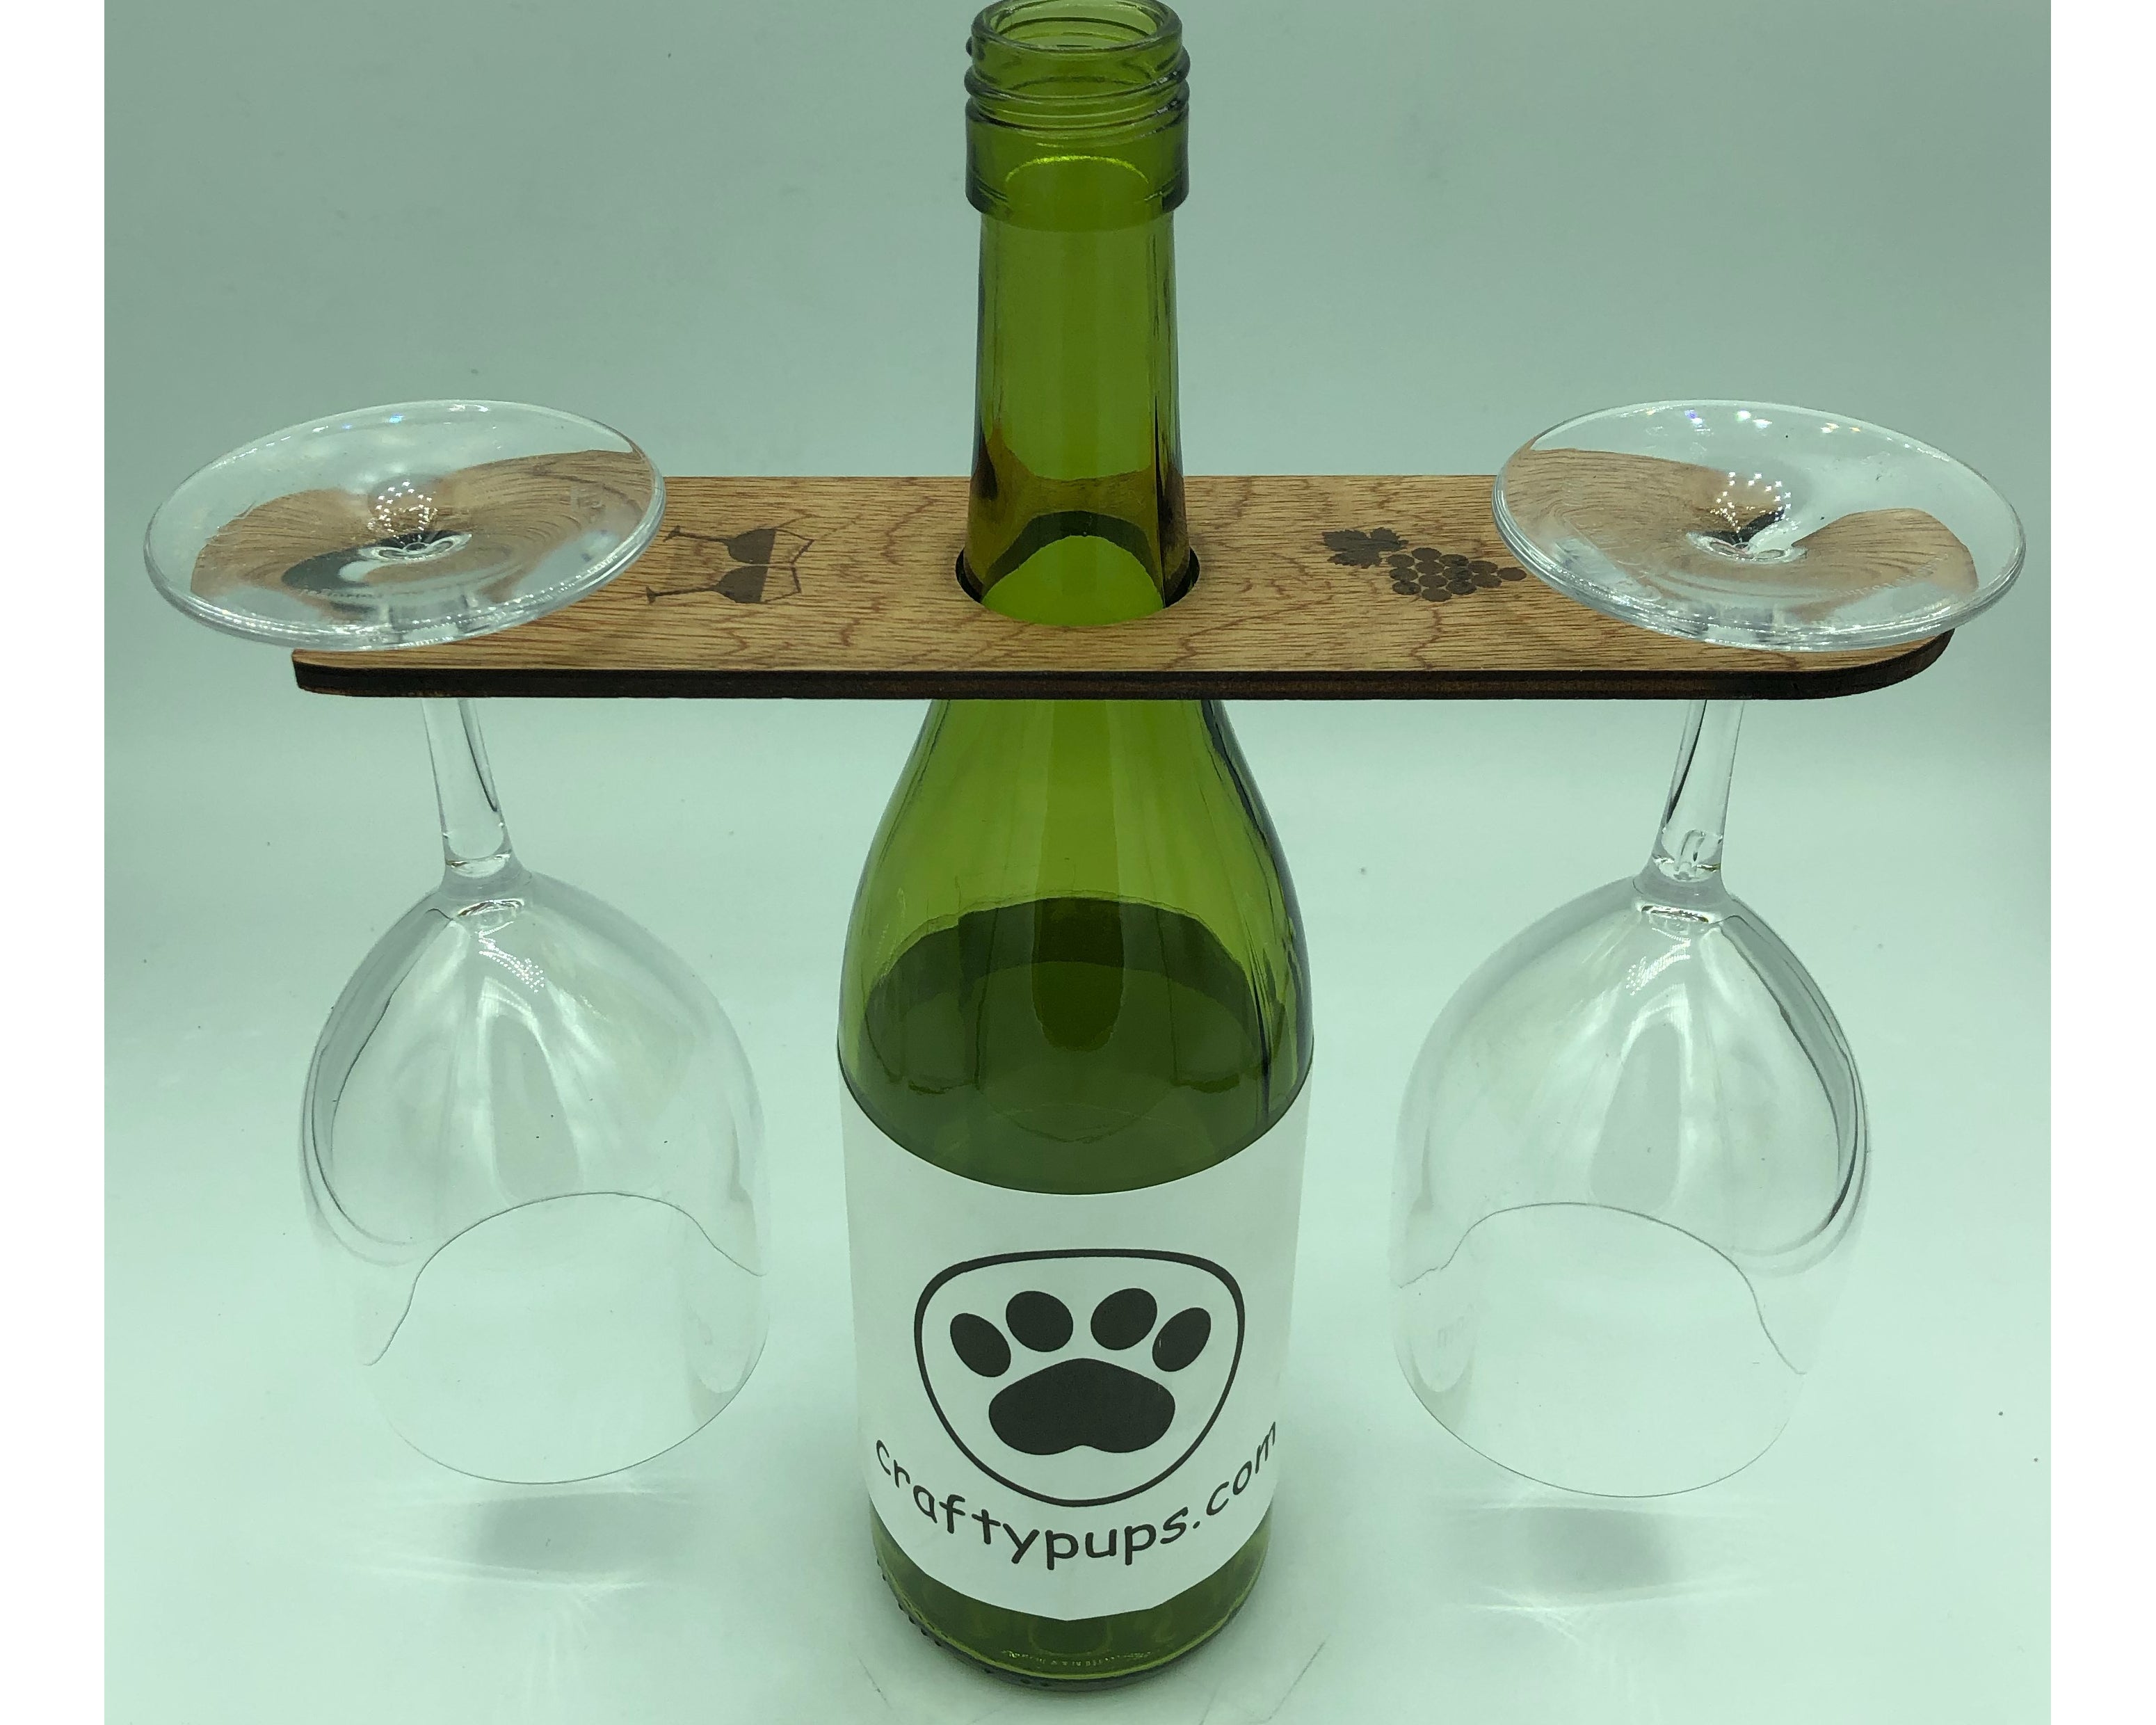 Wooden wine glass holder for two glasses